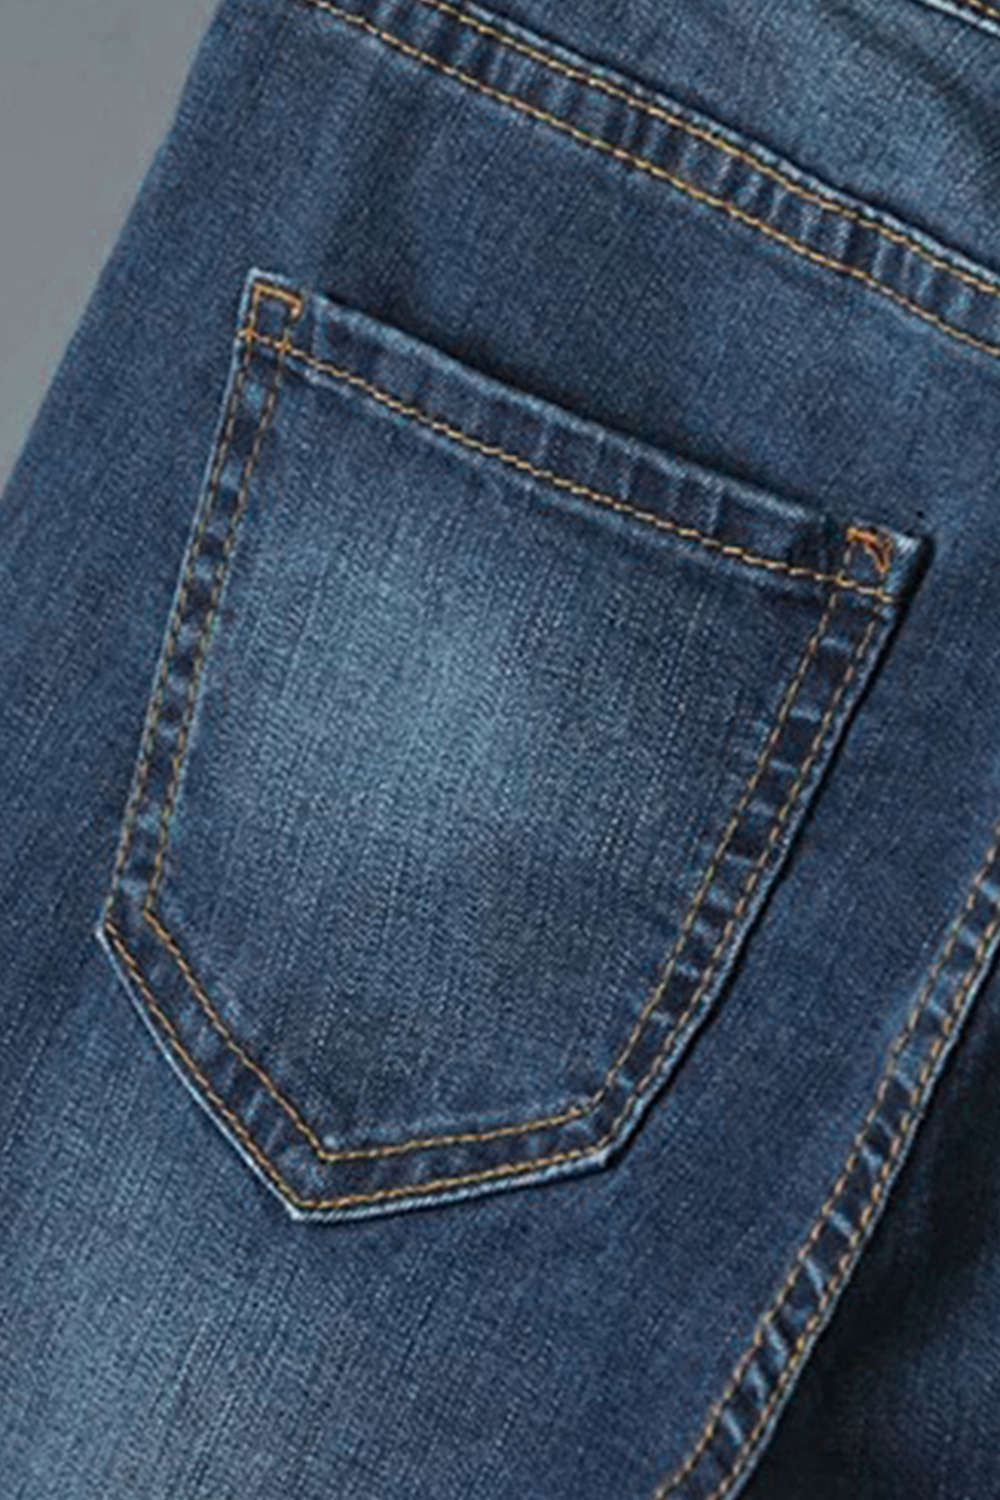 Iyasson Women's Bell Bottom Jeans